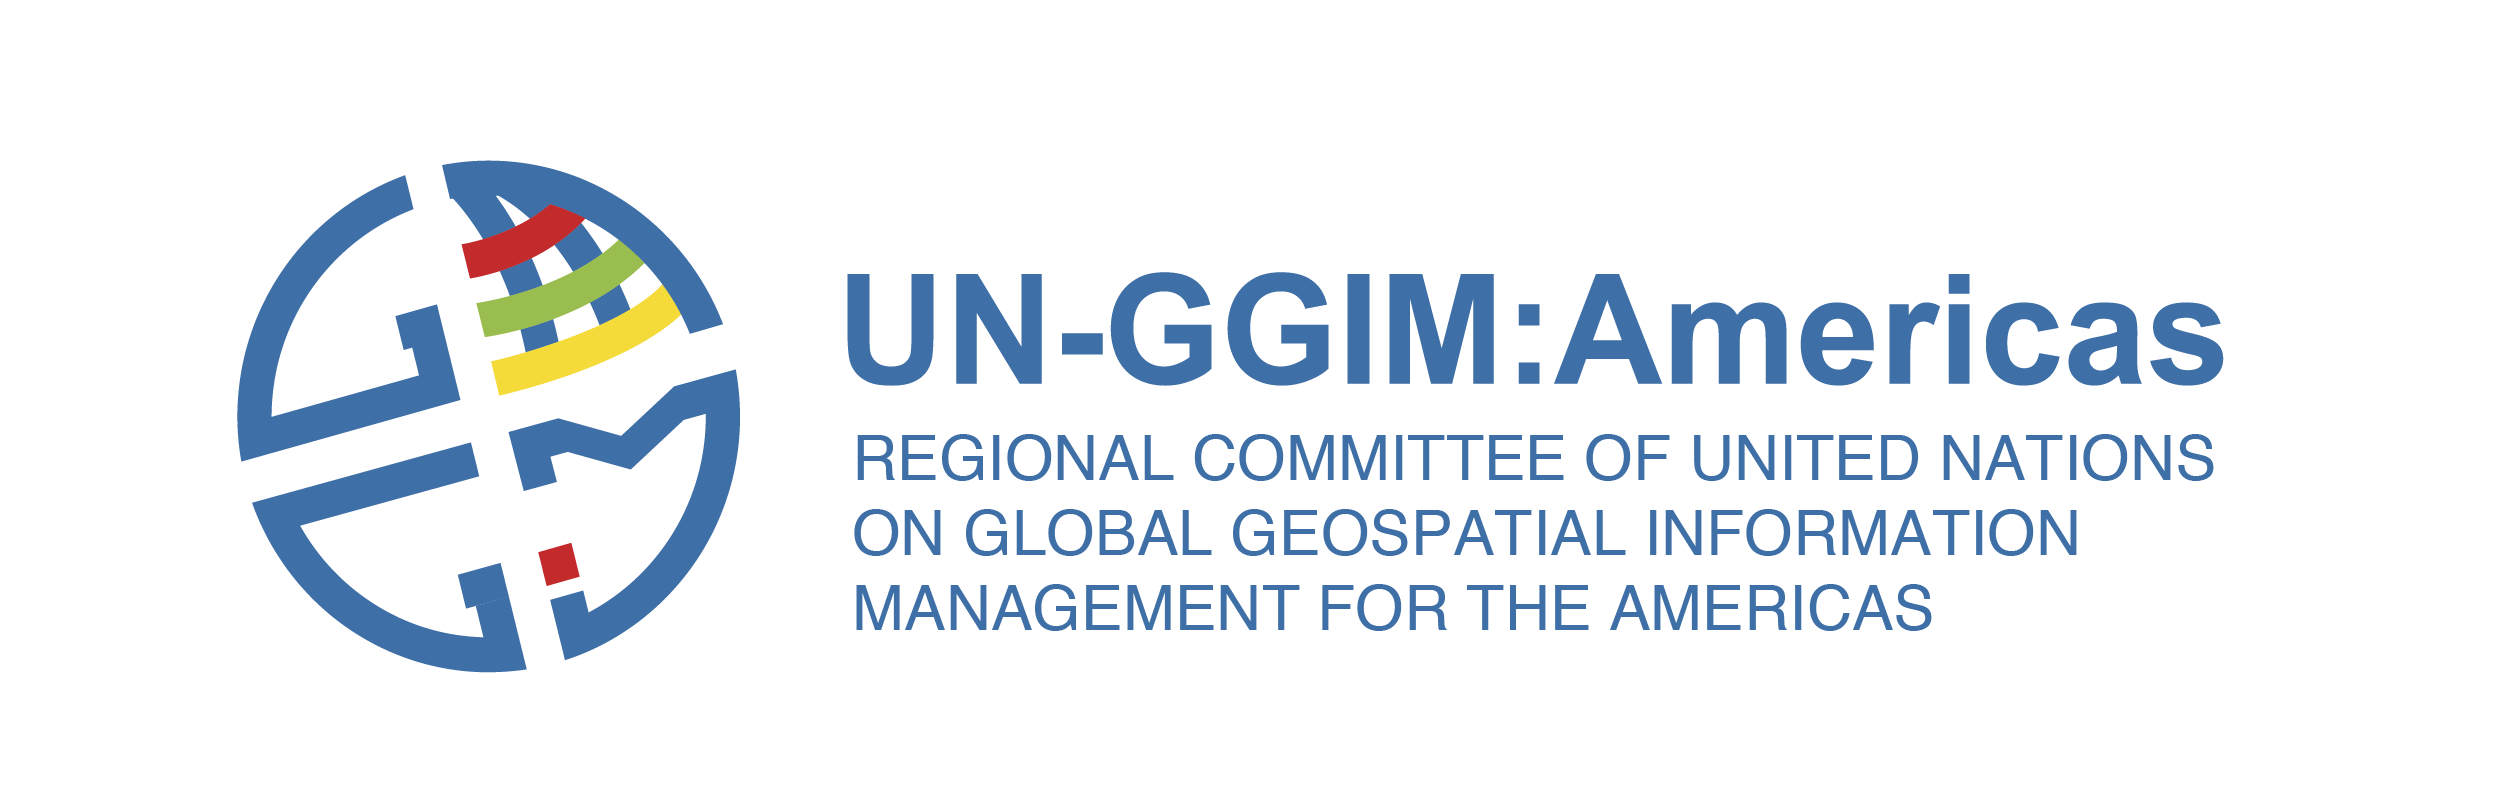 UN-GGIM Americas Logo